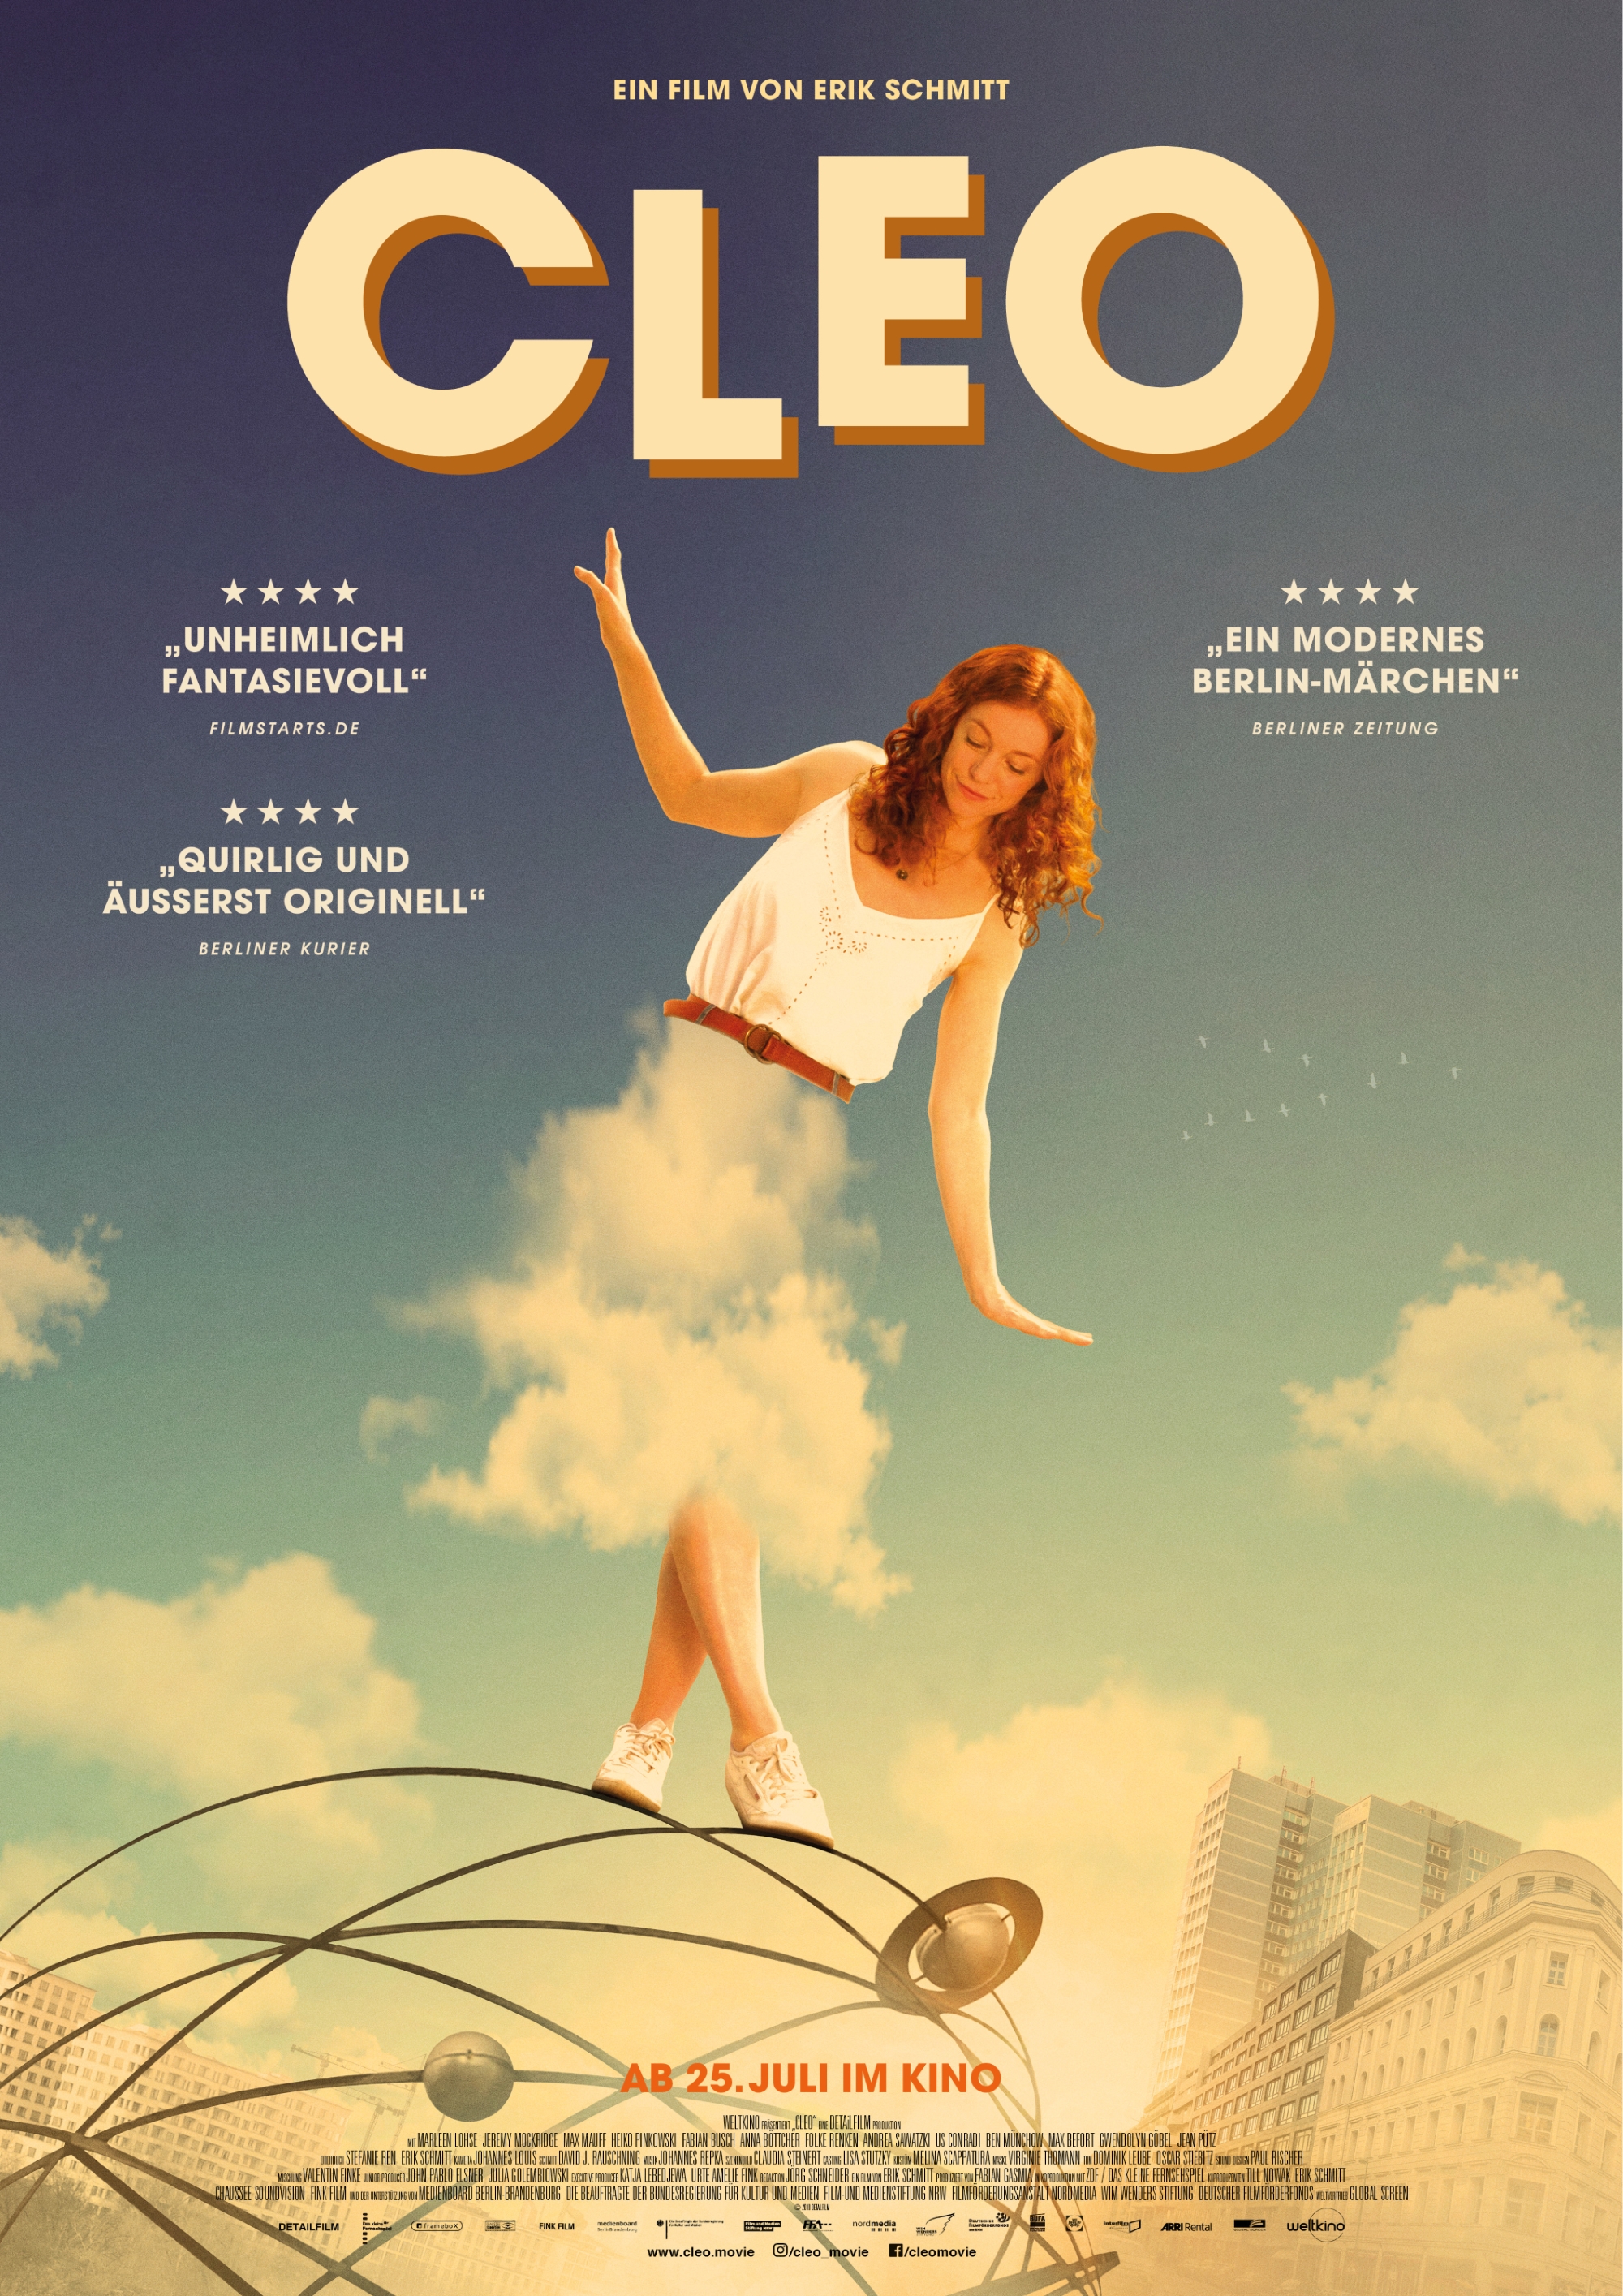 Cleo Film 19 Trailer Kritik Kino De